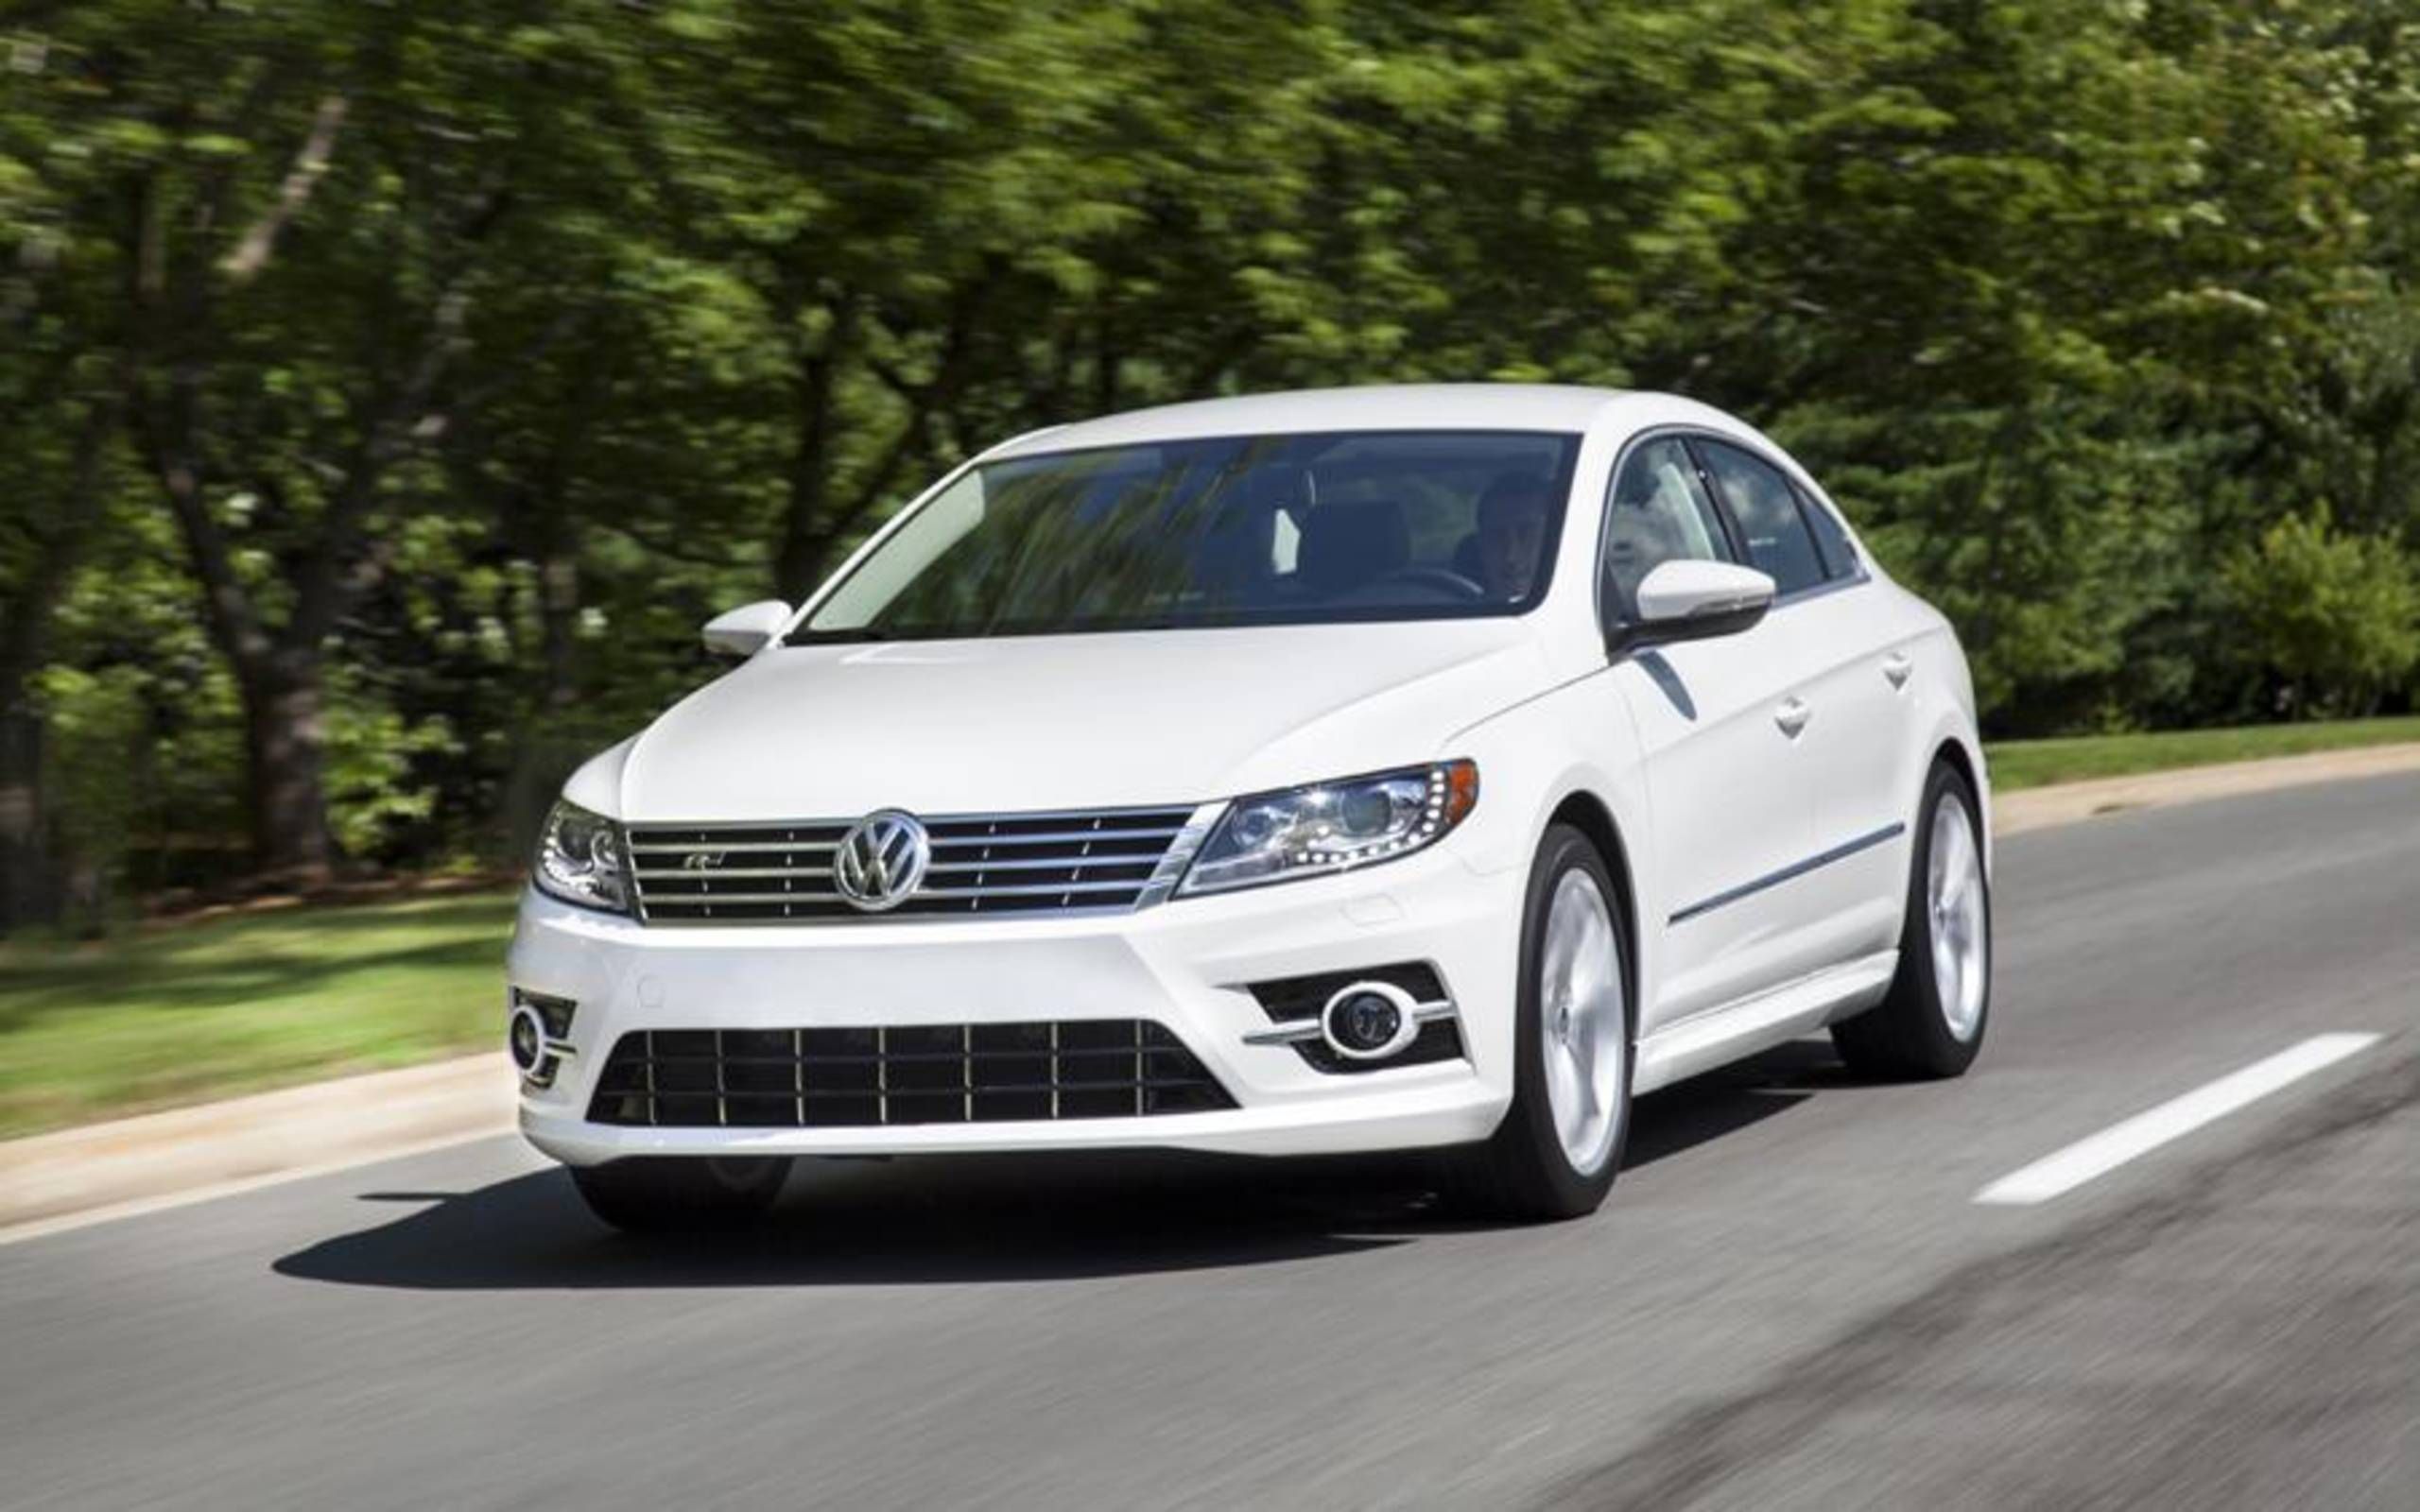 2014 Volkswagen CC R-Line review